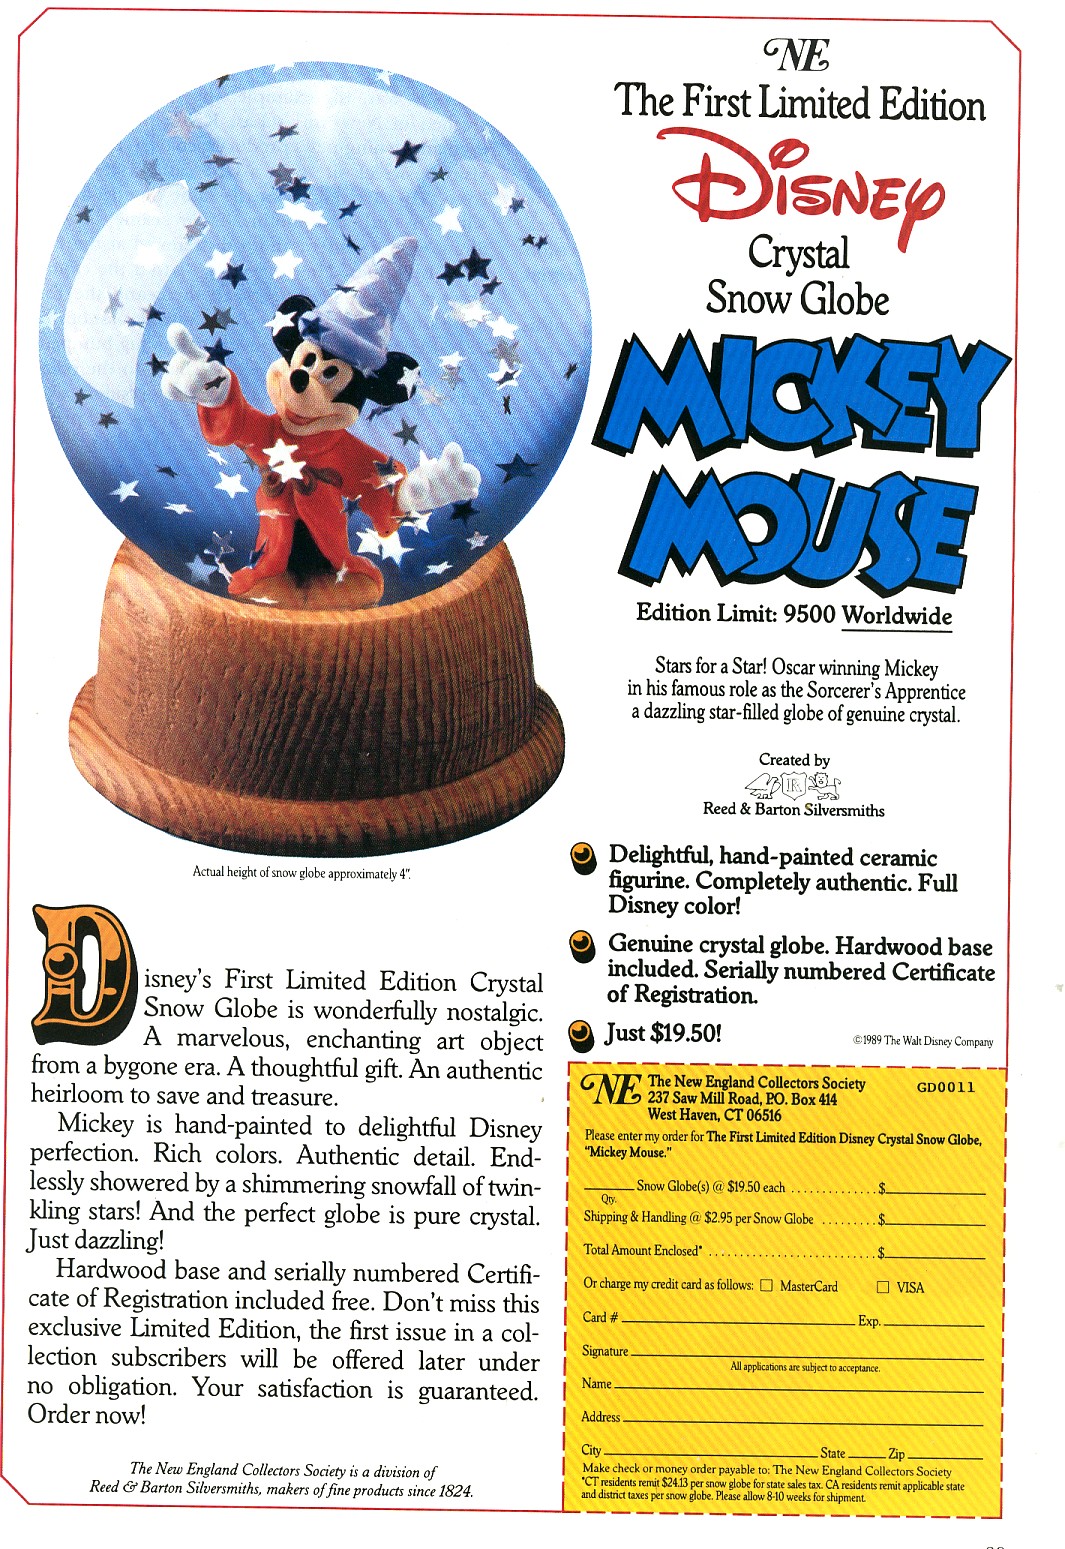 1989 Disney Snow Globe Ad Mickey Mouse Old Magazine Ads